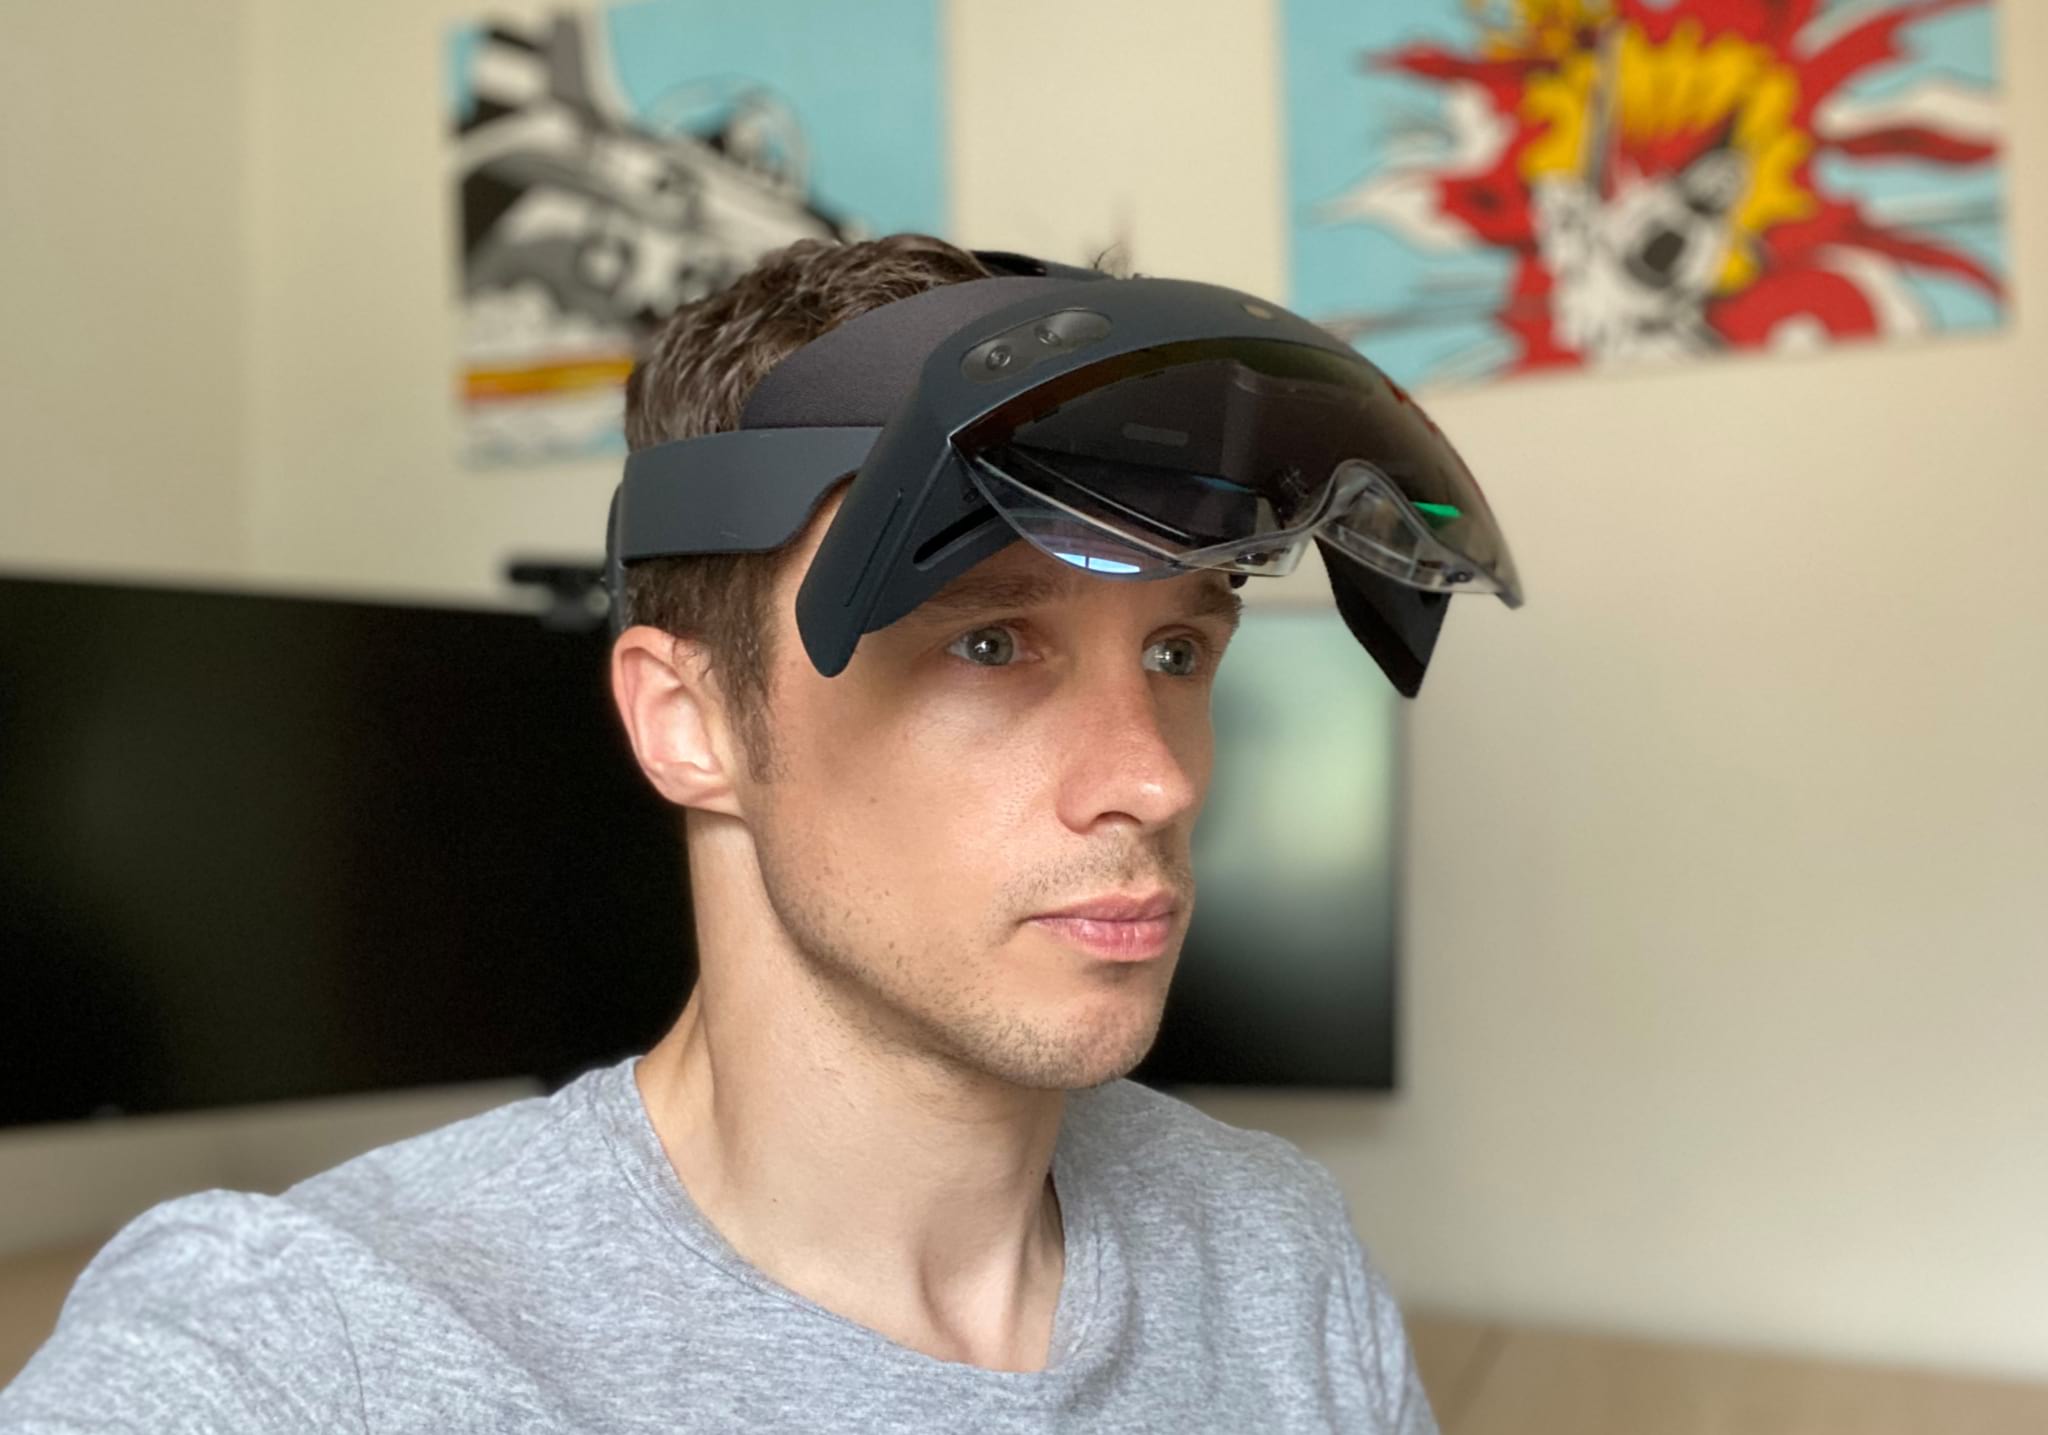 Microsoft HoloLens 2